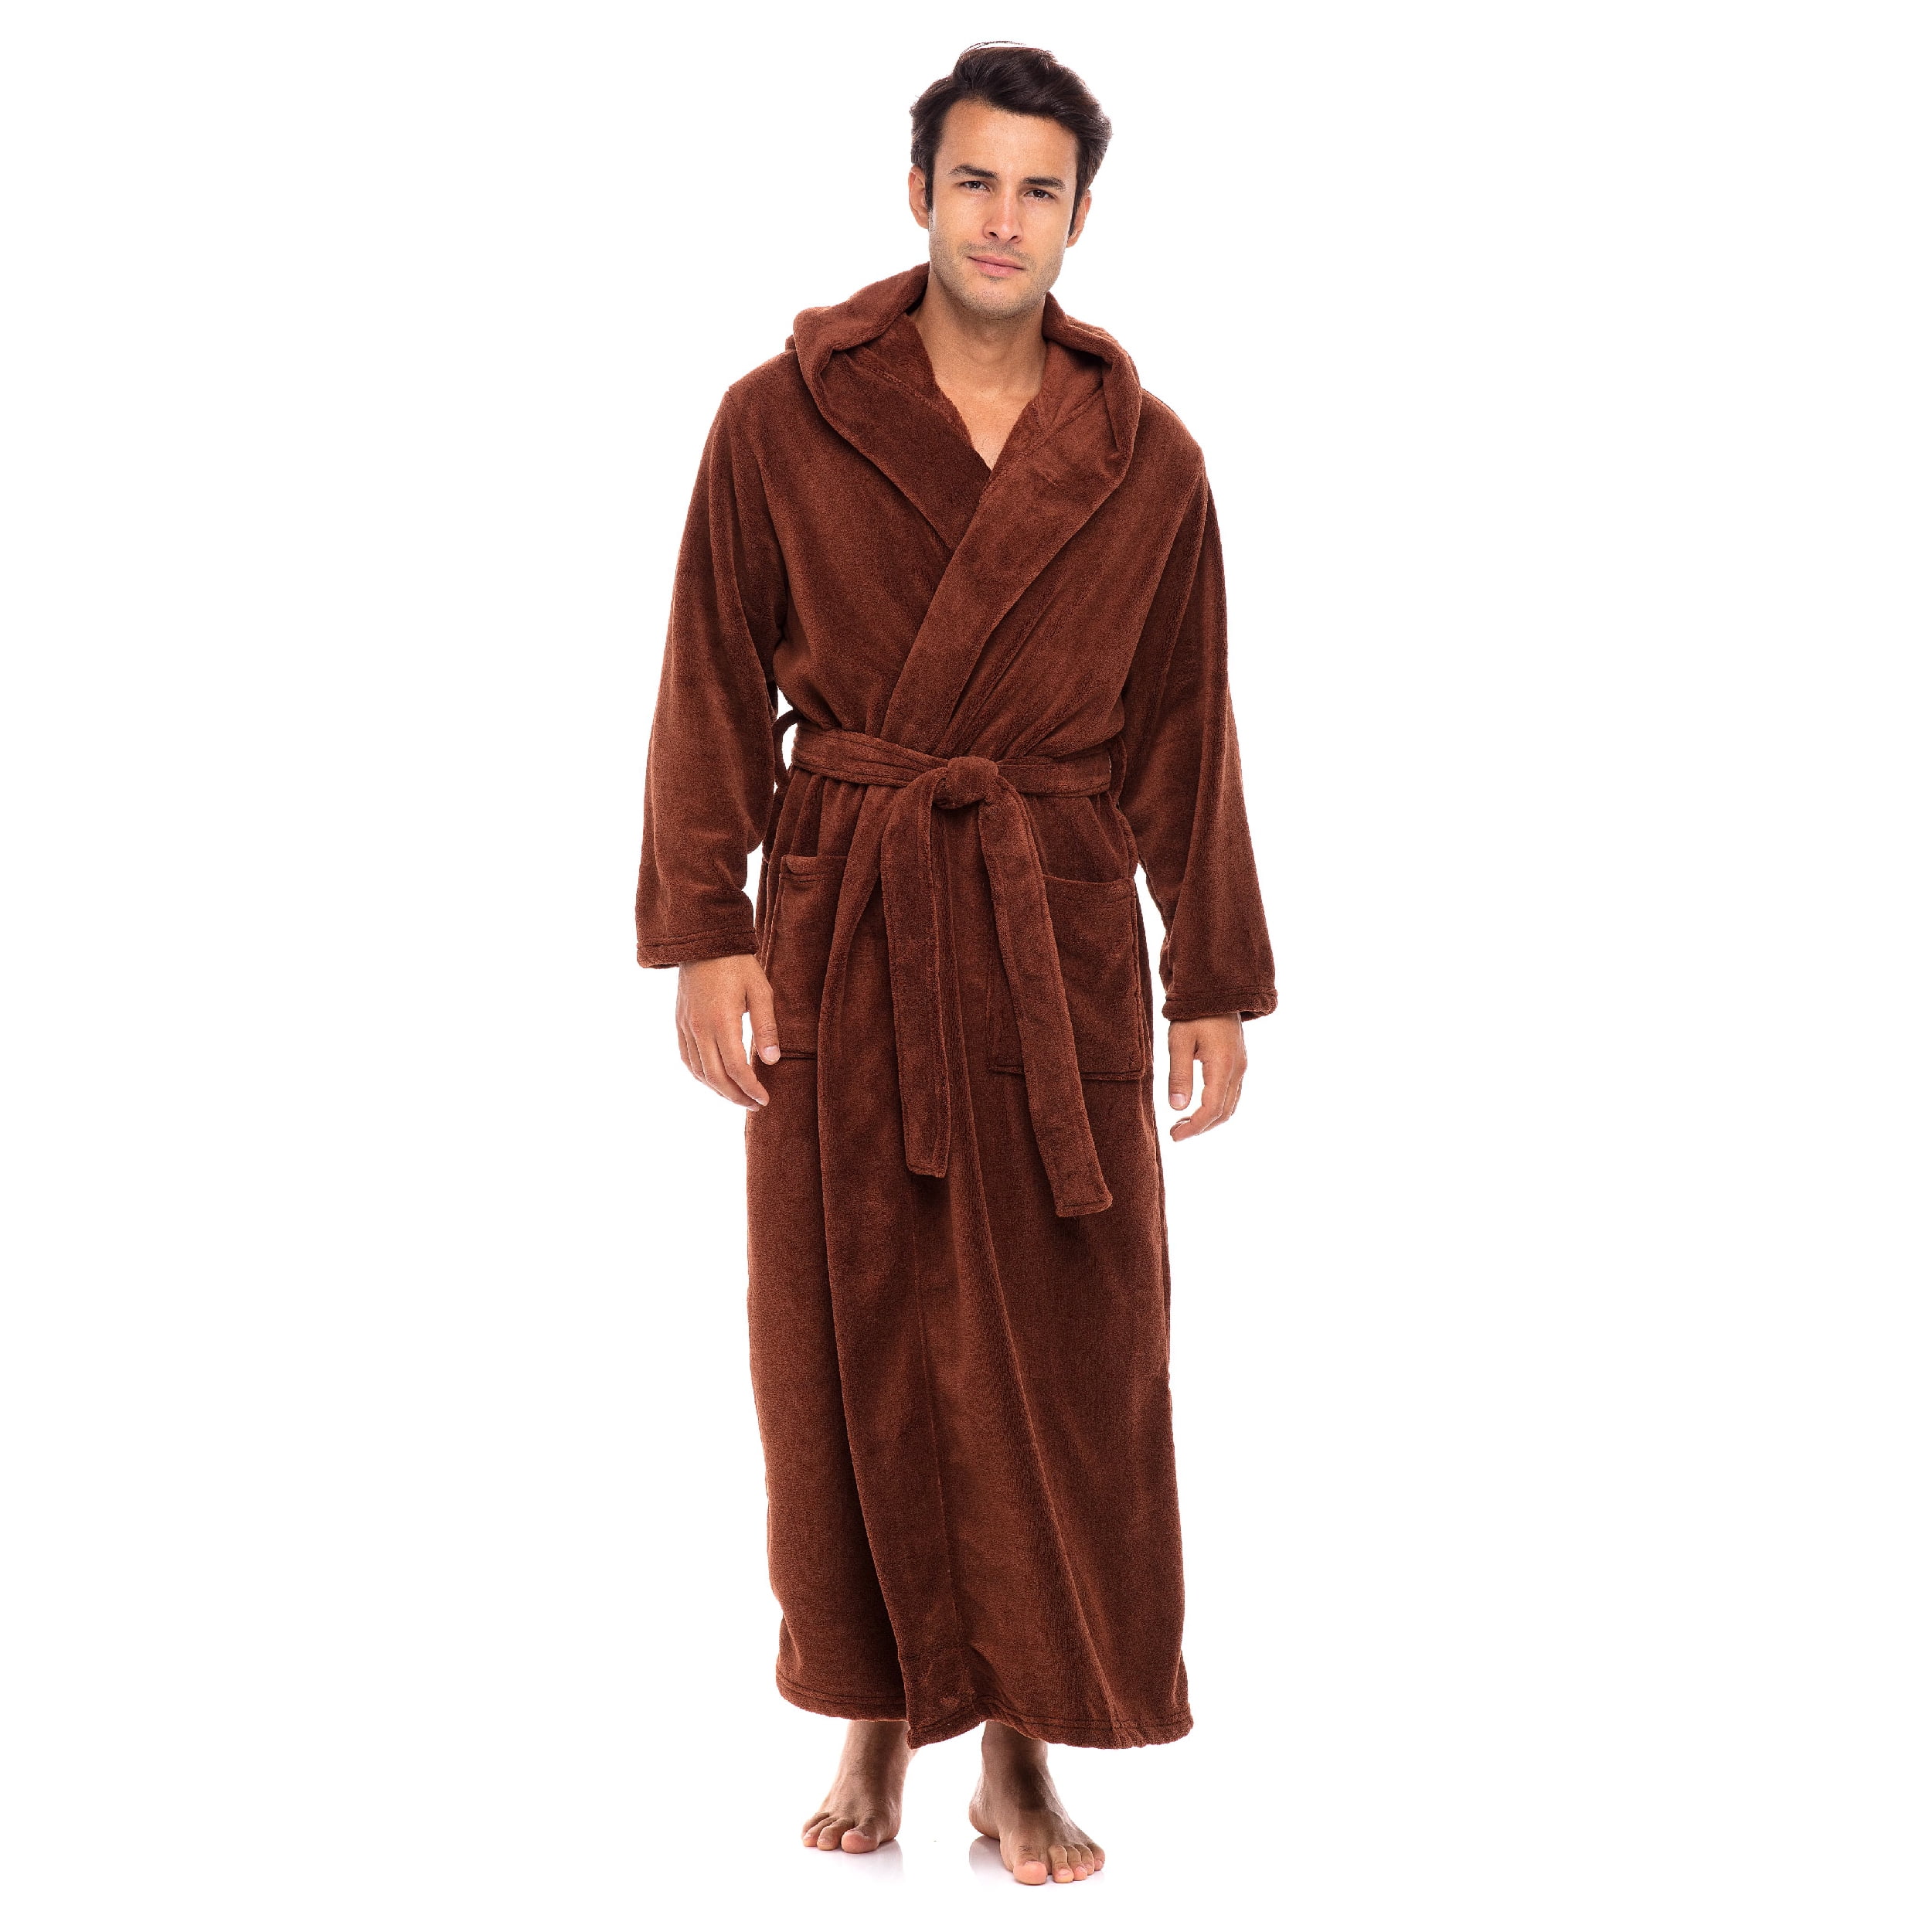 S-5XL Mens Plush Hooded Robe Full Length Long Big and Tall Soft Fleece Bathrobes Warm Shawl for Winter